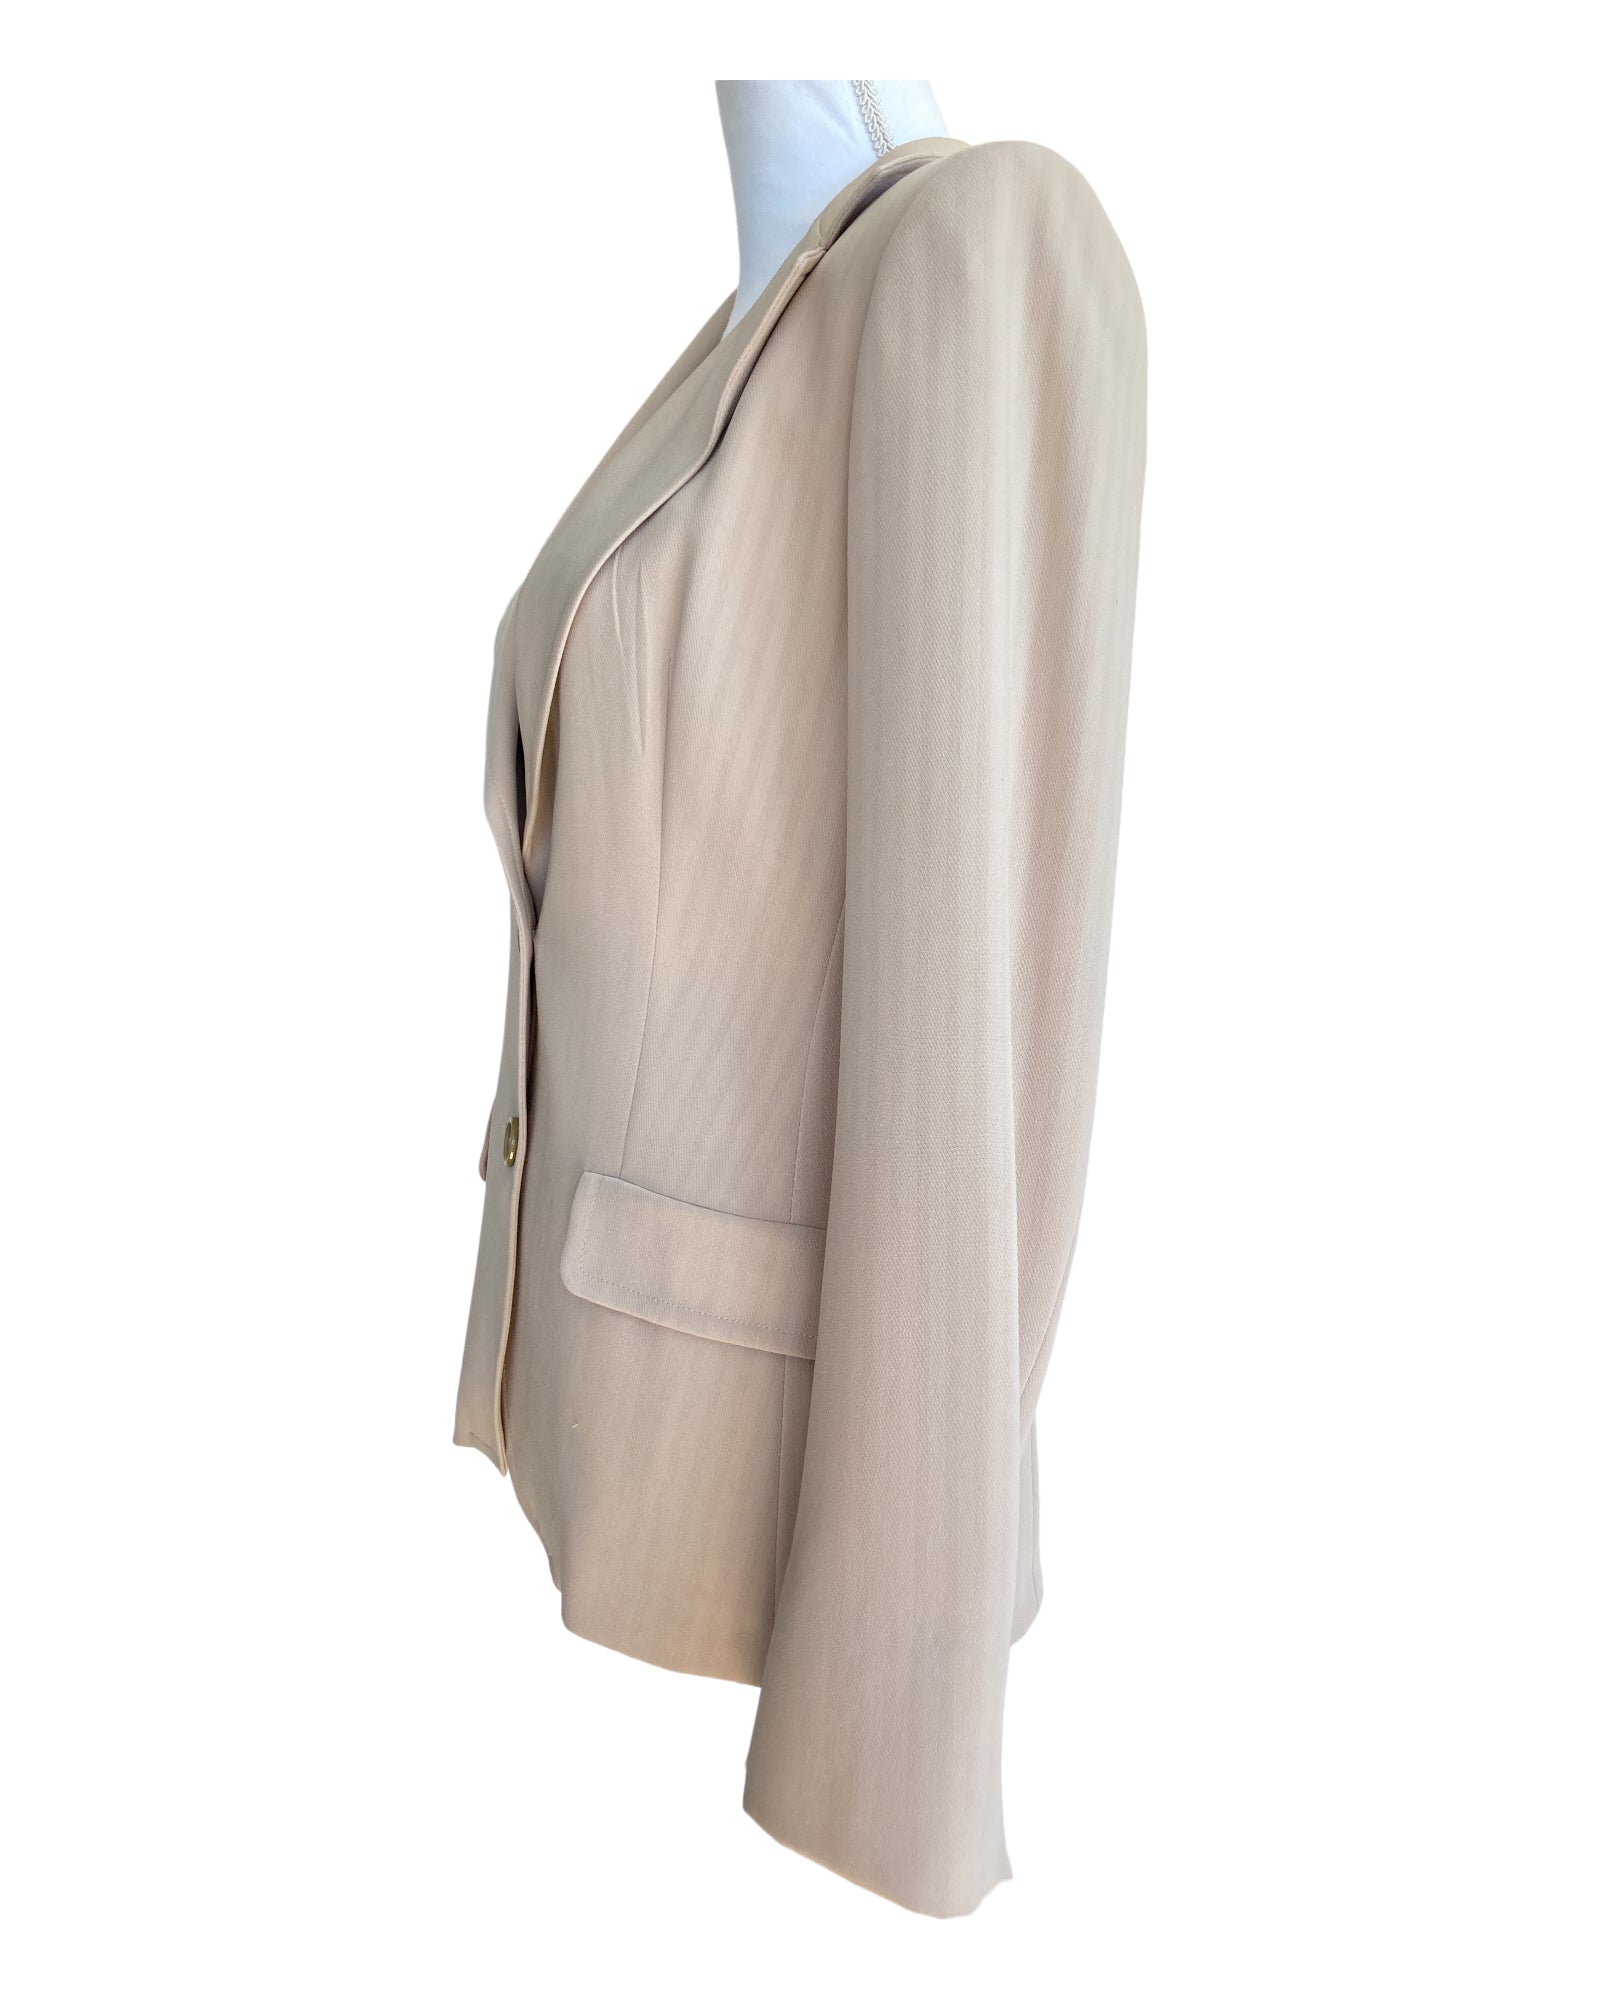 Max Mara Vintage Warm Beige Suit, 6